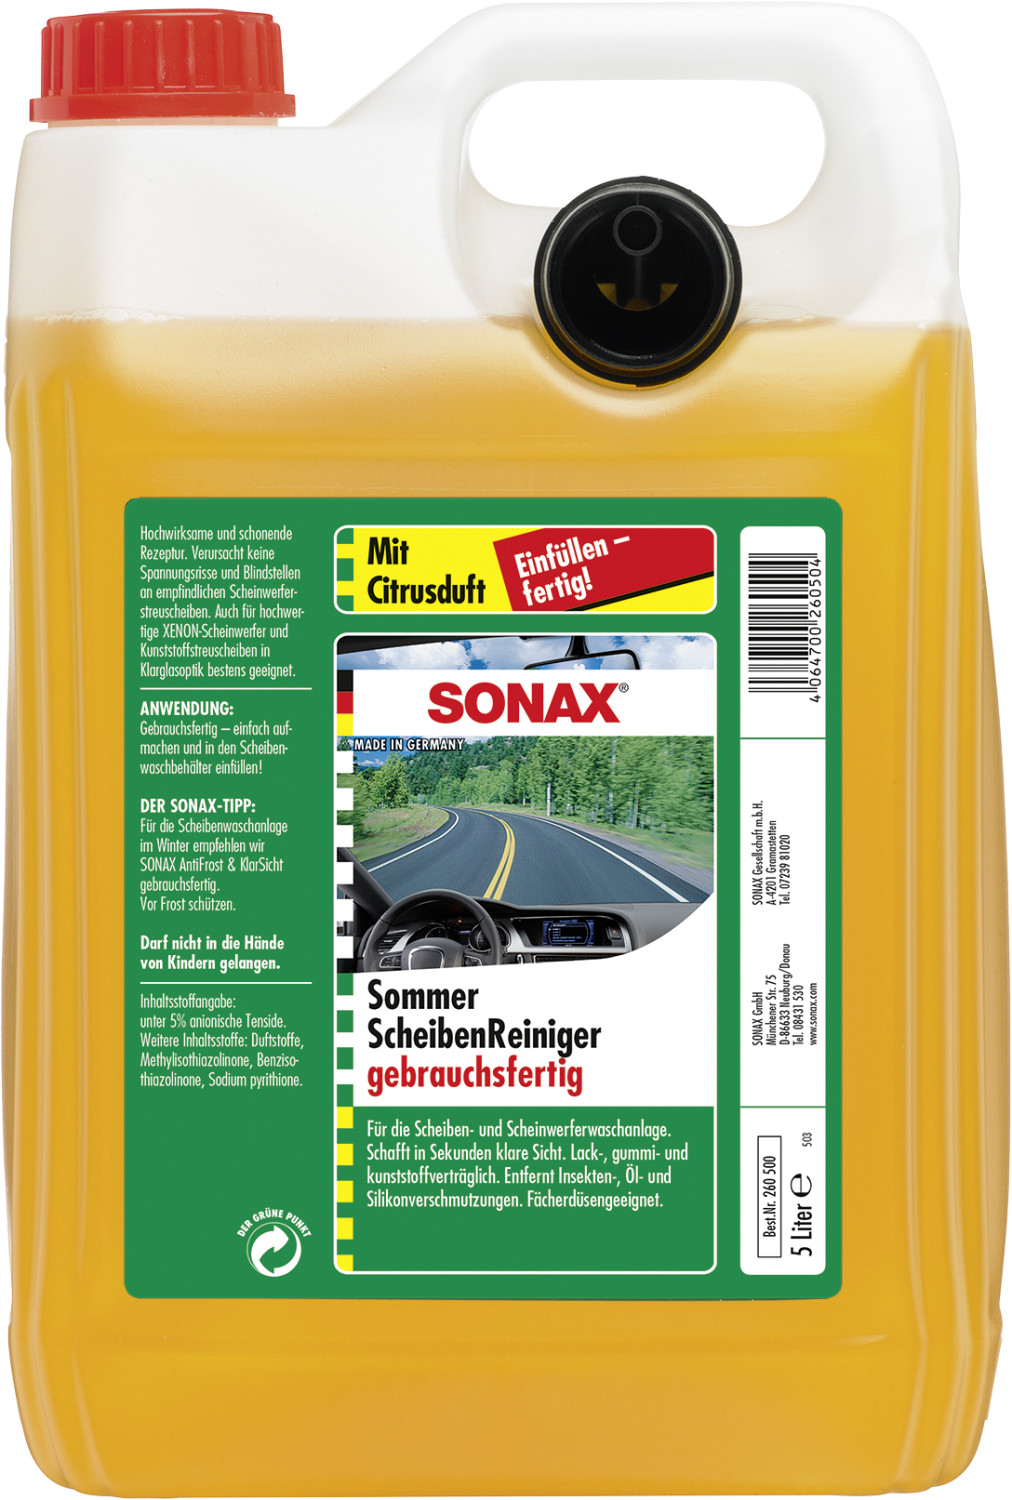 SONAX AntiFrost + KlarSicht Konzentrat Citrus 3x5 = 15 Liter